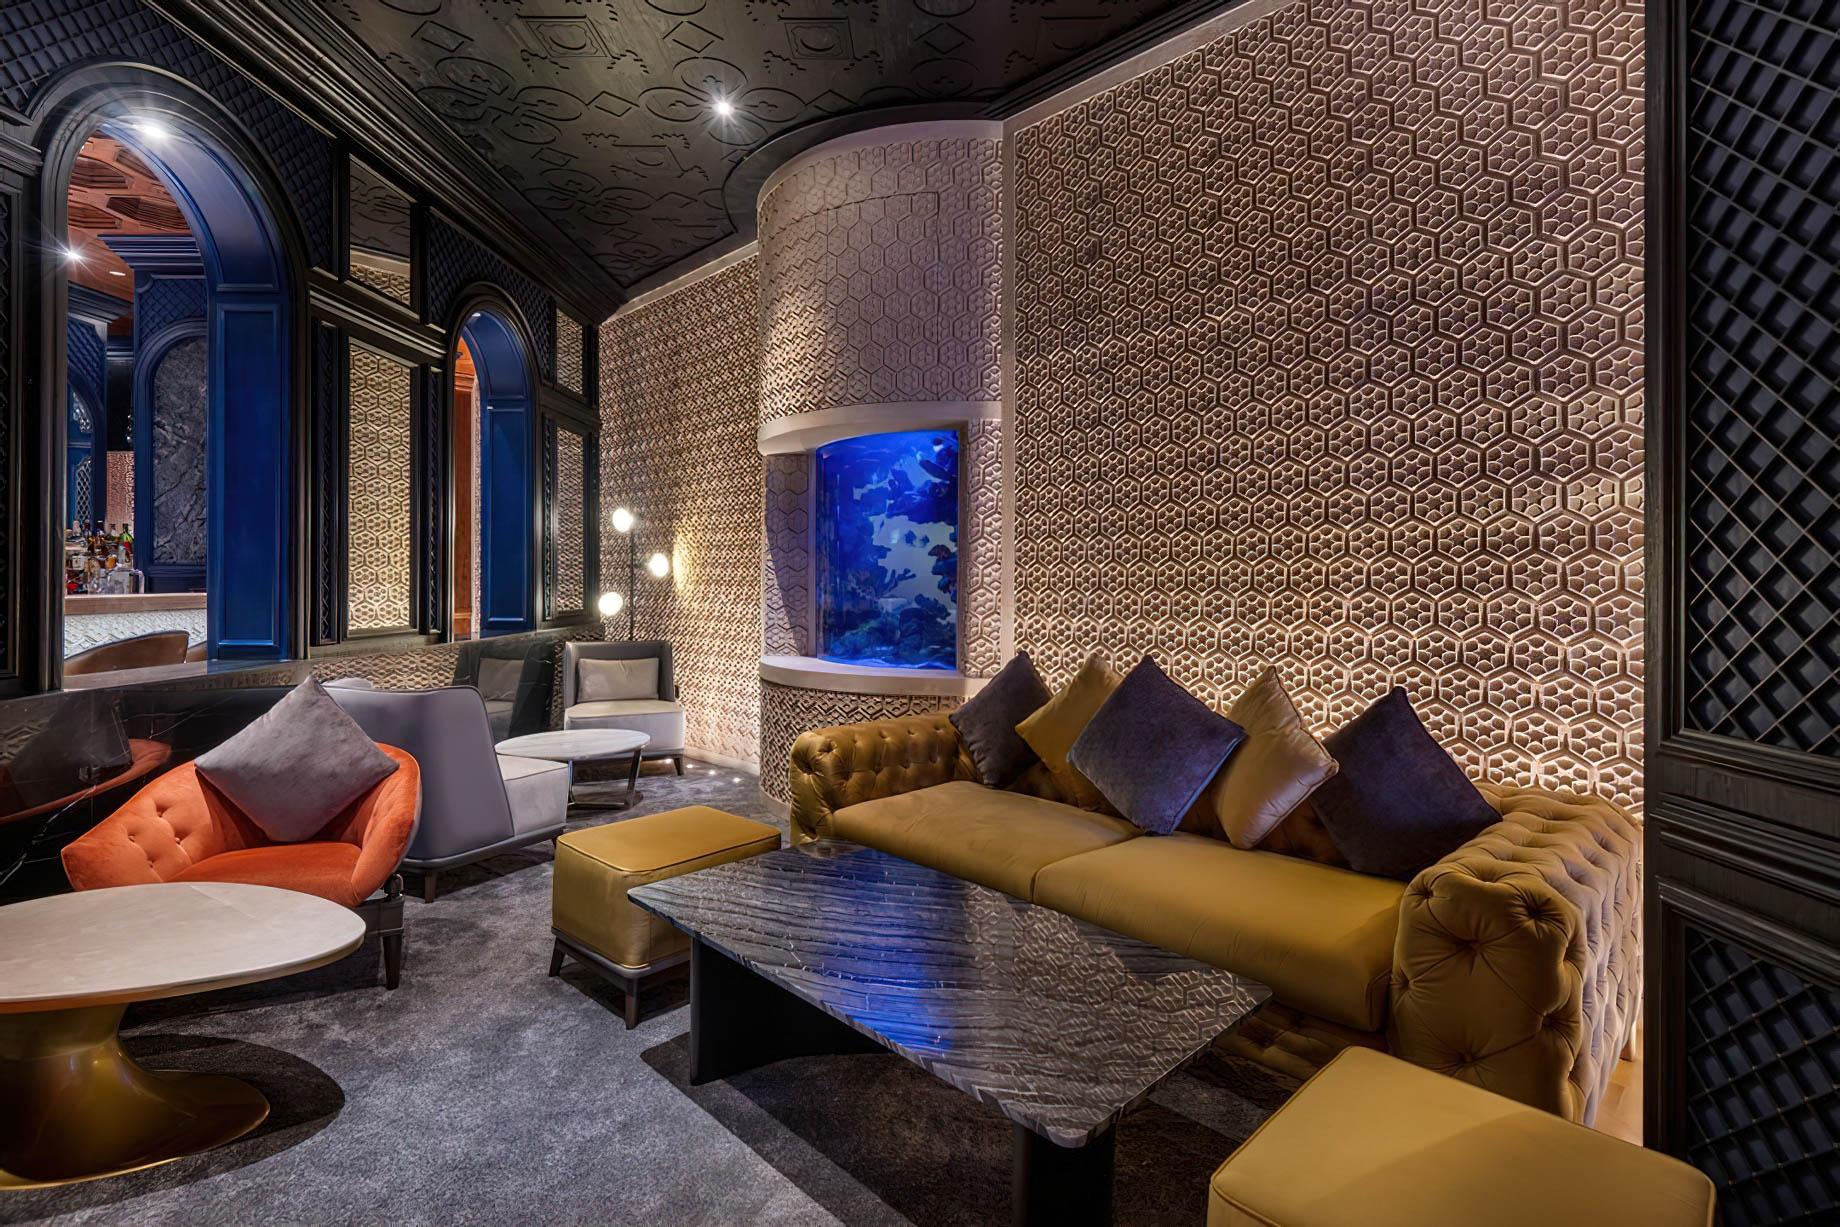 Sharq Village & Spa, A Ritz-Carlton Hotel - Doha, Qatar - El Cedro Tasting Room